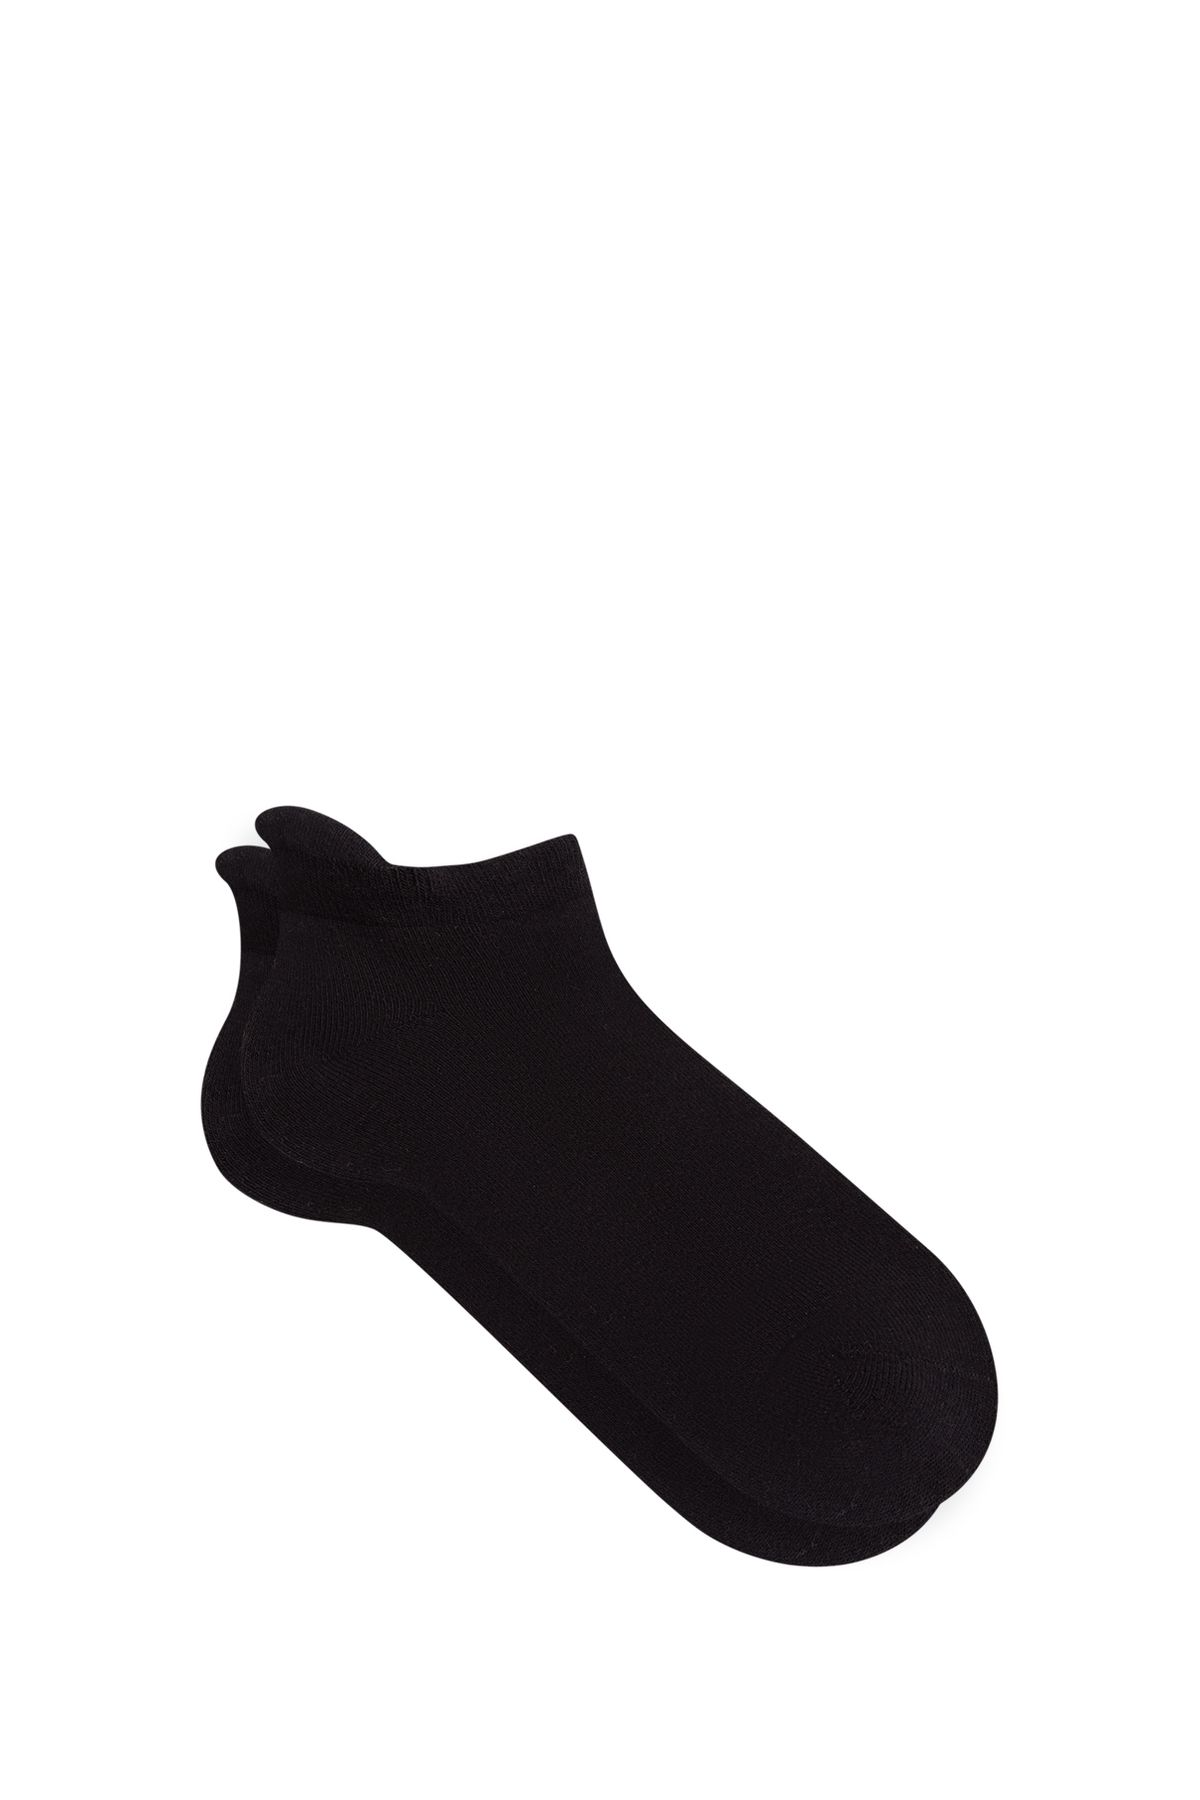 Mavi Siyah Patik Çorap 1910908-900